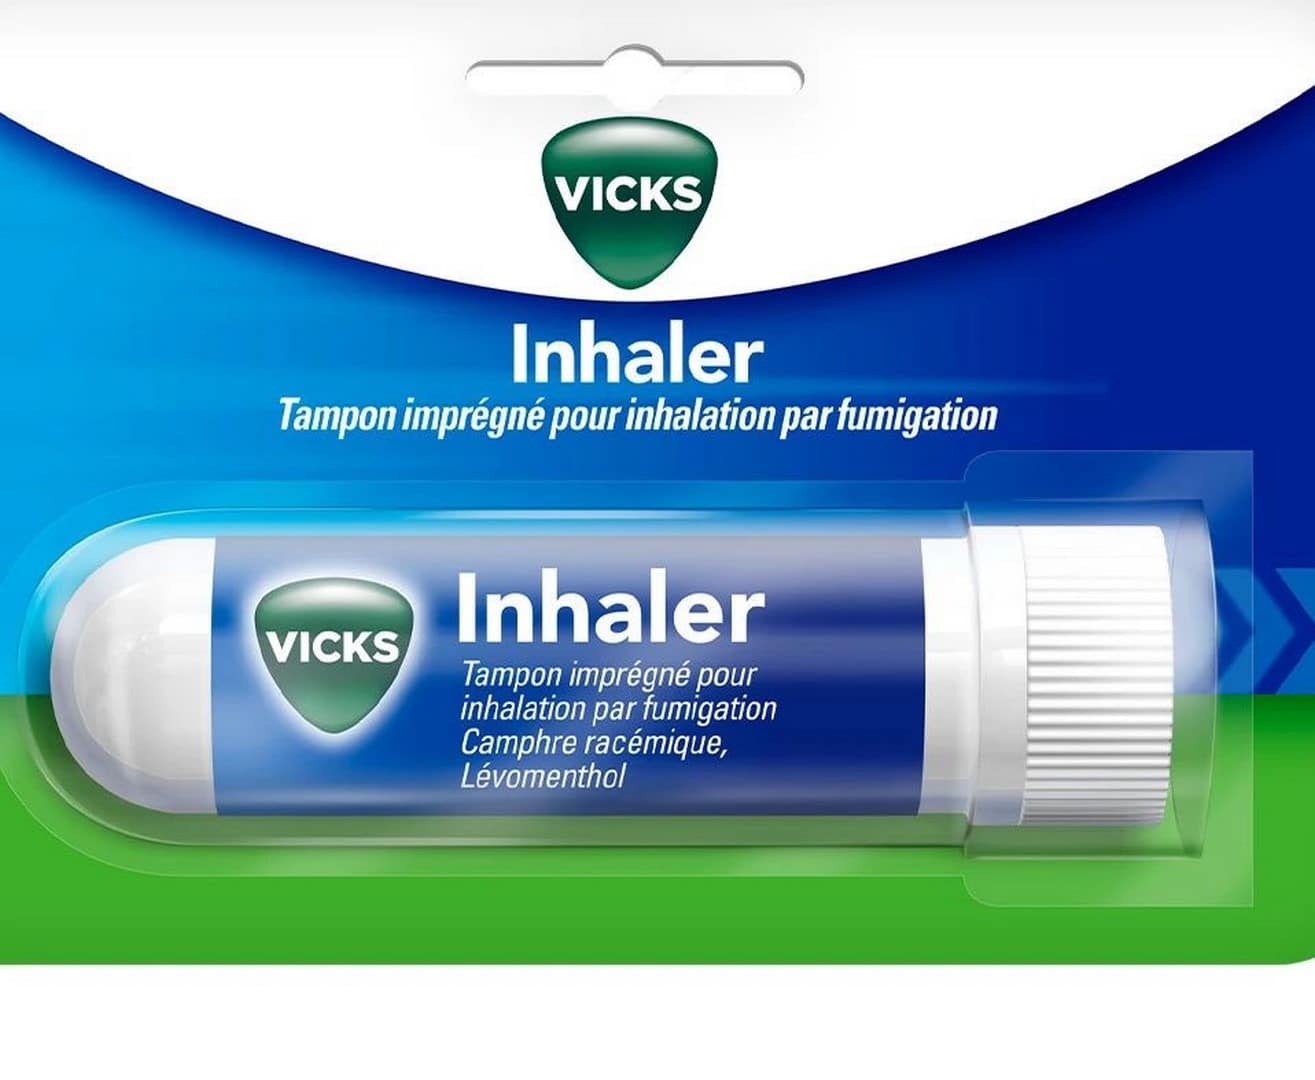 vicks-inhaler-tampon-impregne-pharmacie-charlet-rieux